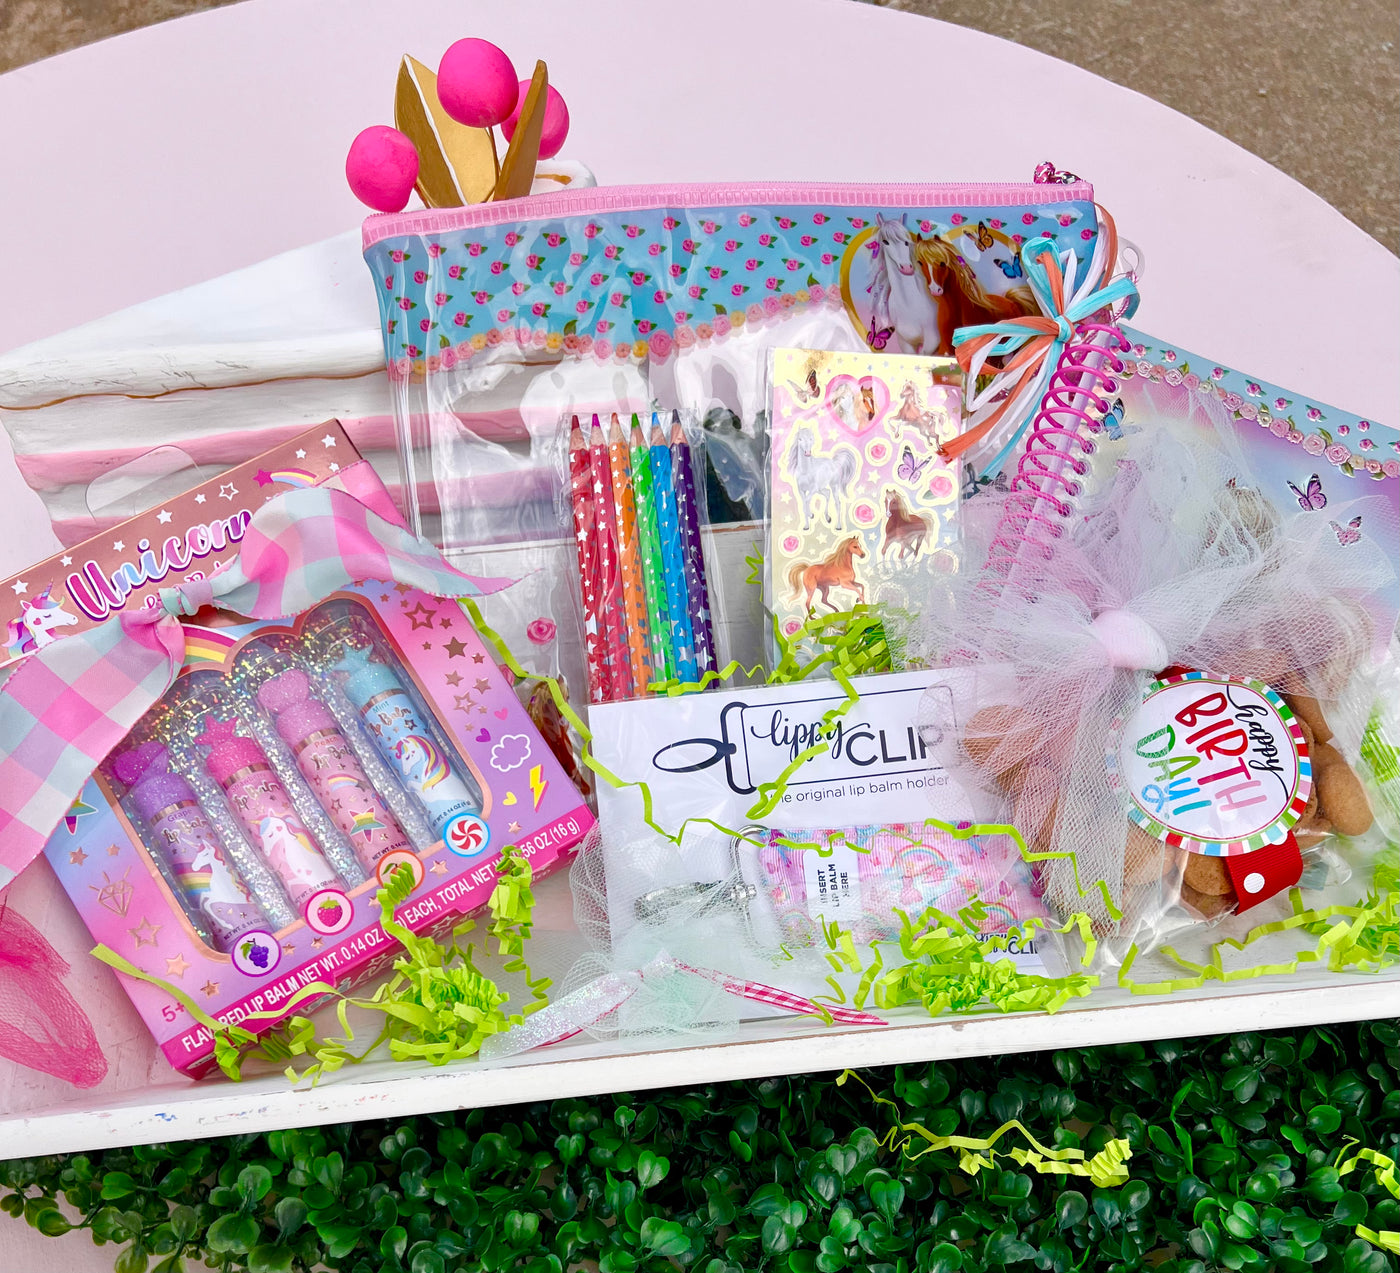 Girly Girl Birthday Box